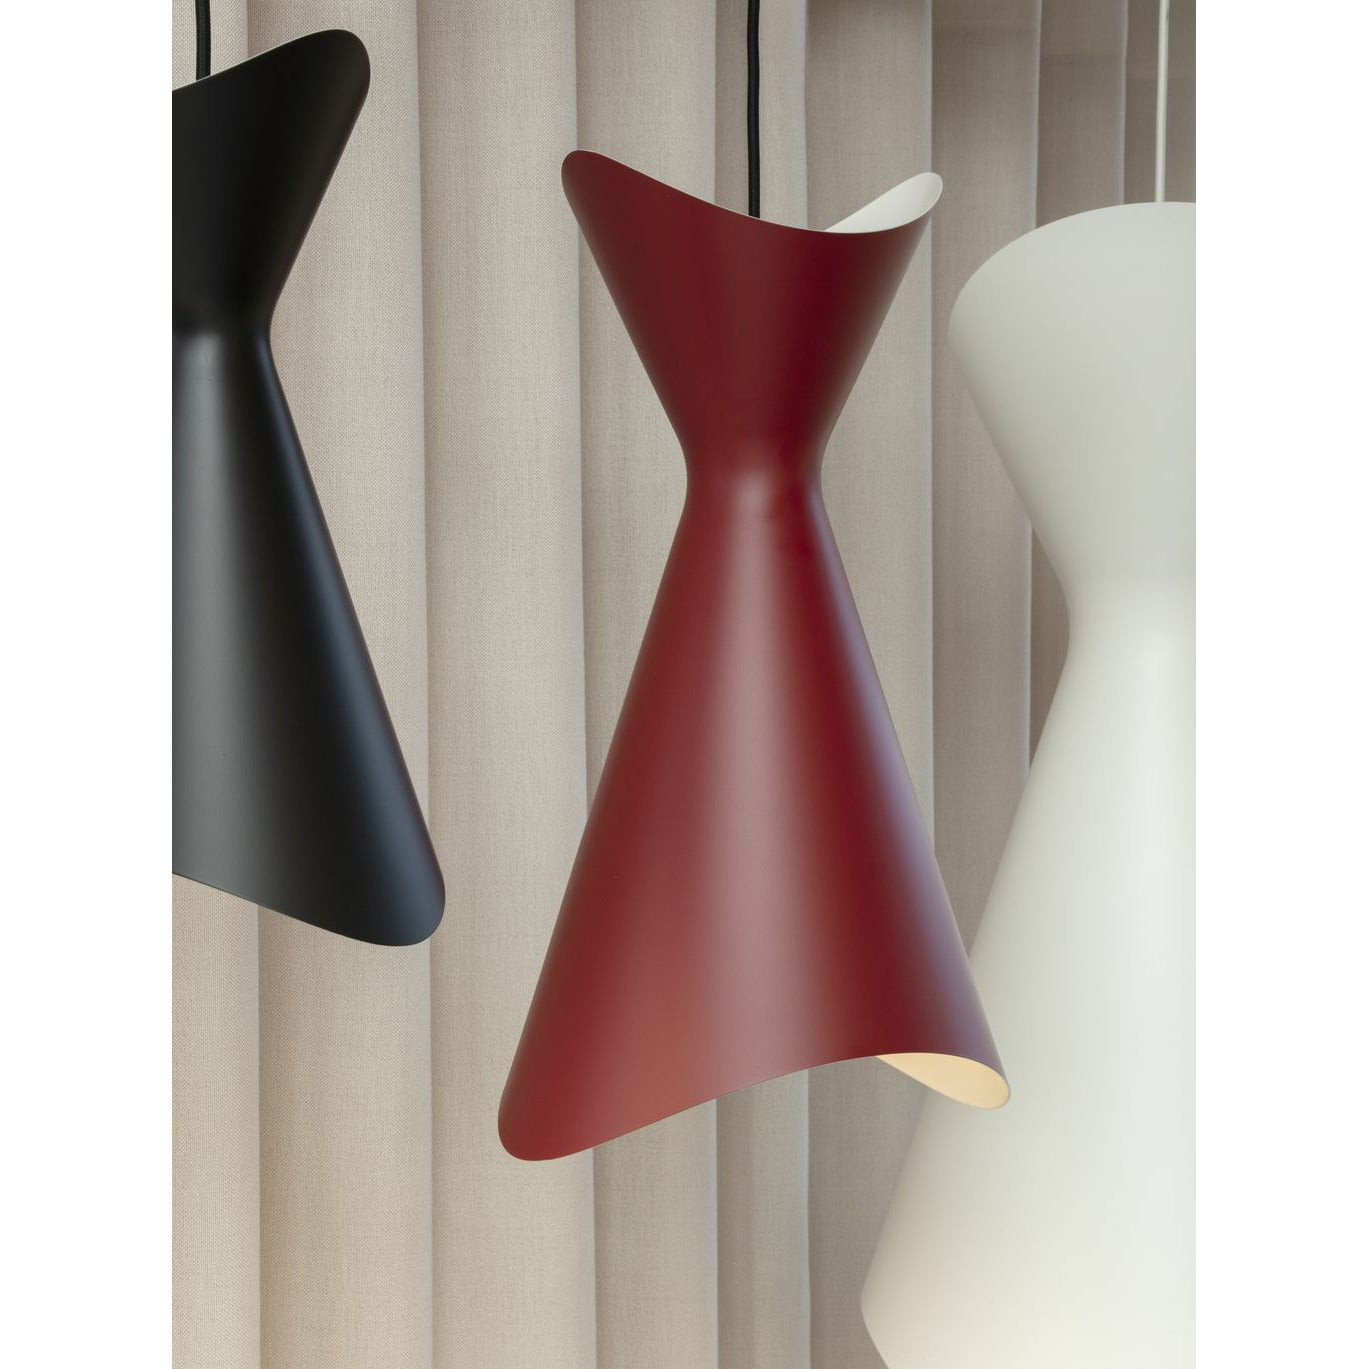 Lyfa Ninotchka hanger 27,5 cm, rood